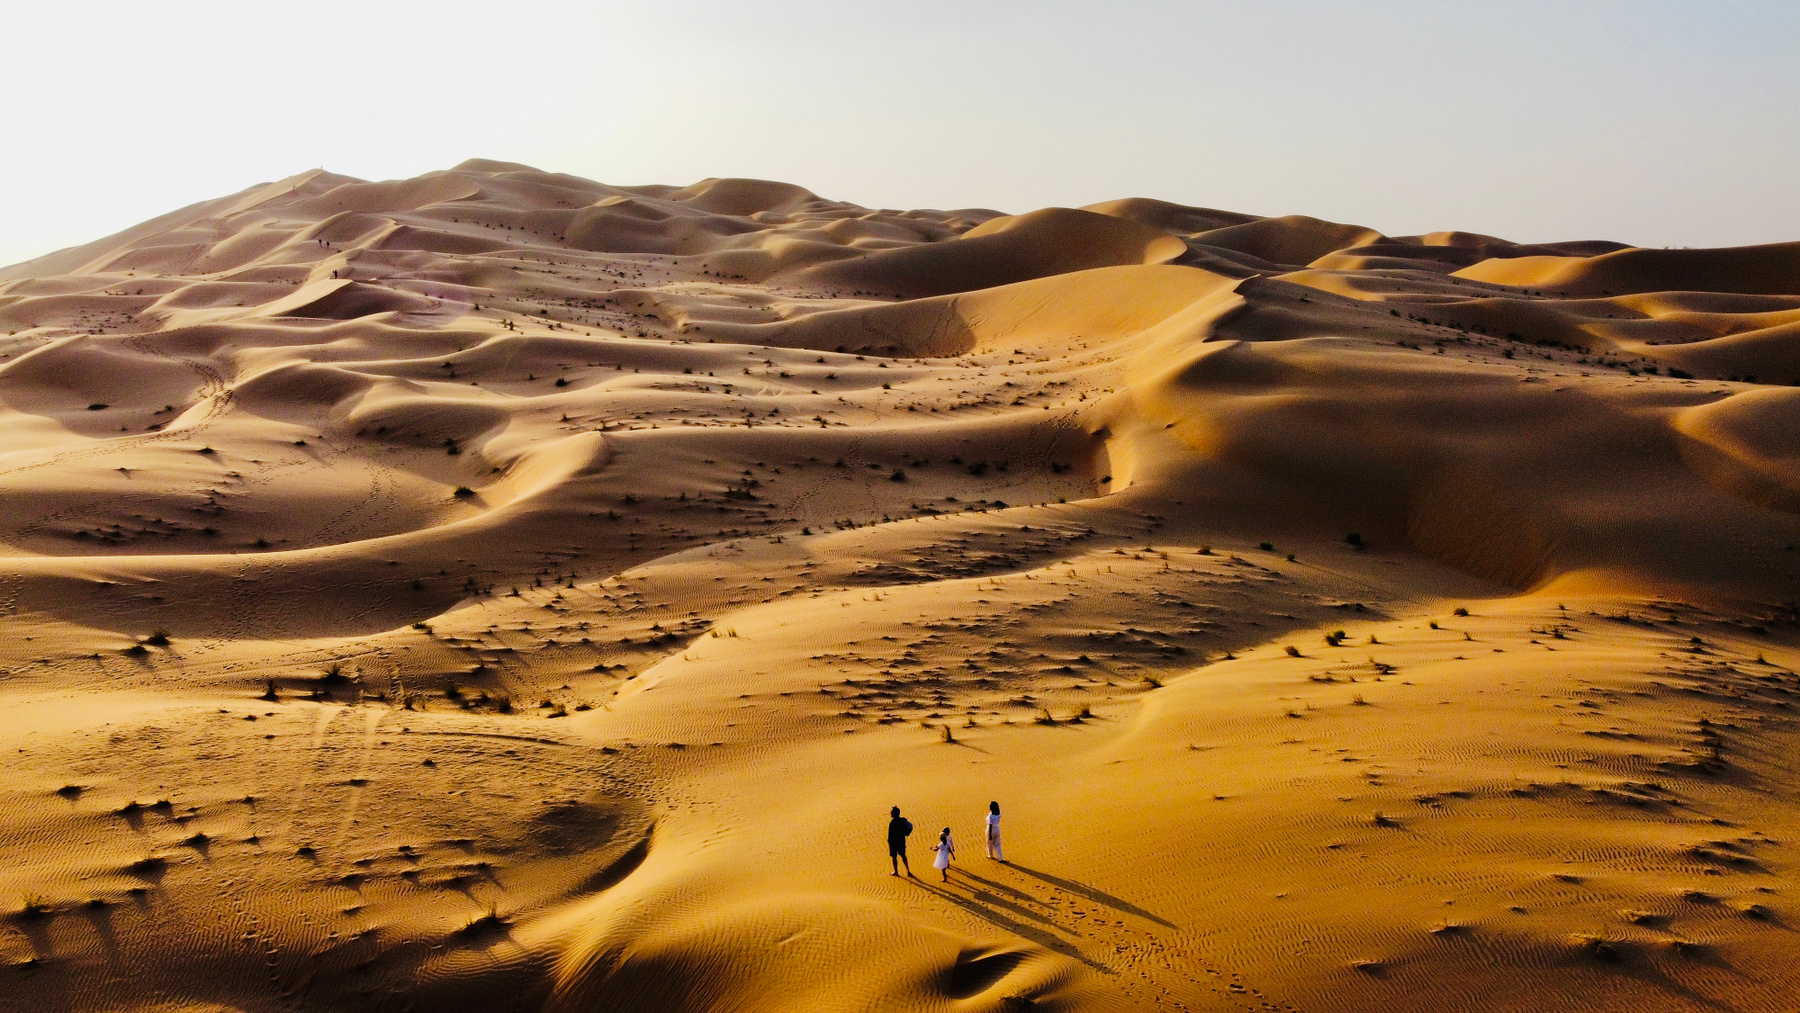 Rub' al Khali desert - Liwa Oasis пейзаж пустыня дрон закат